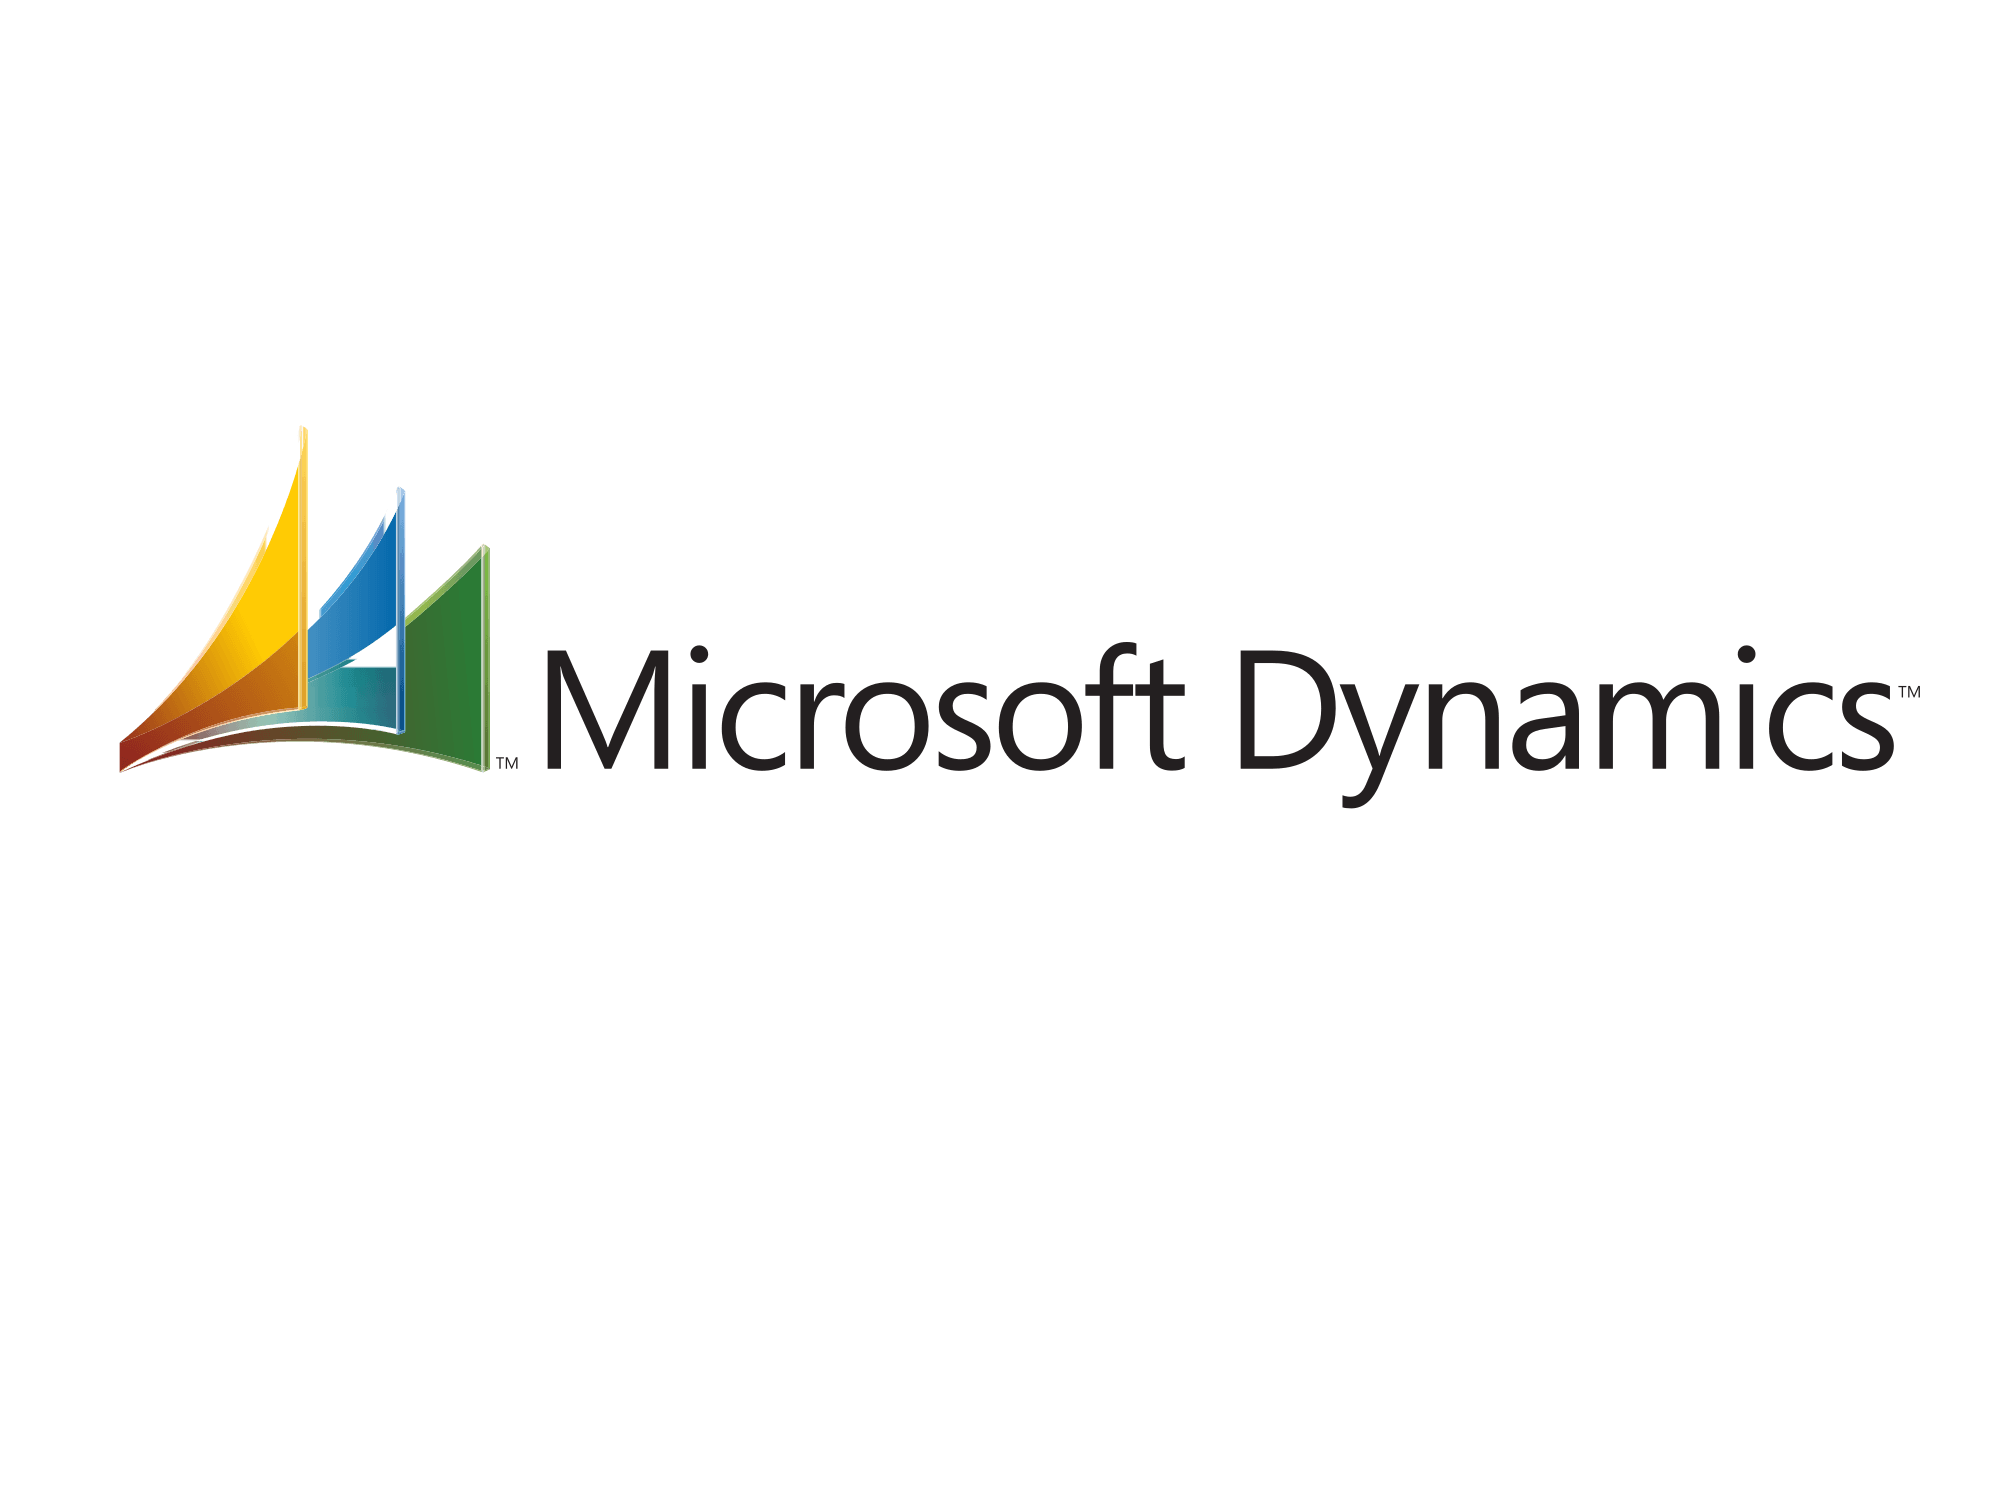 MS Dynamics Logo - Microsoft Dynamics – Wikipedia